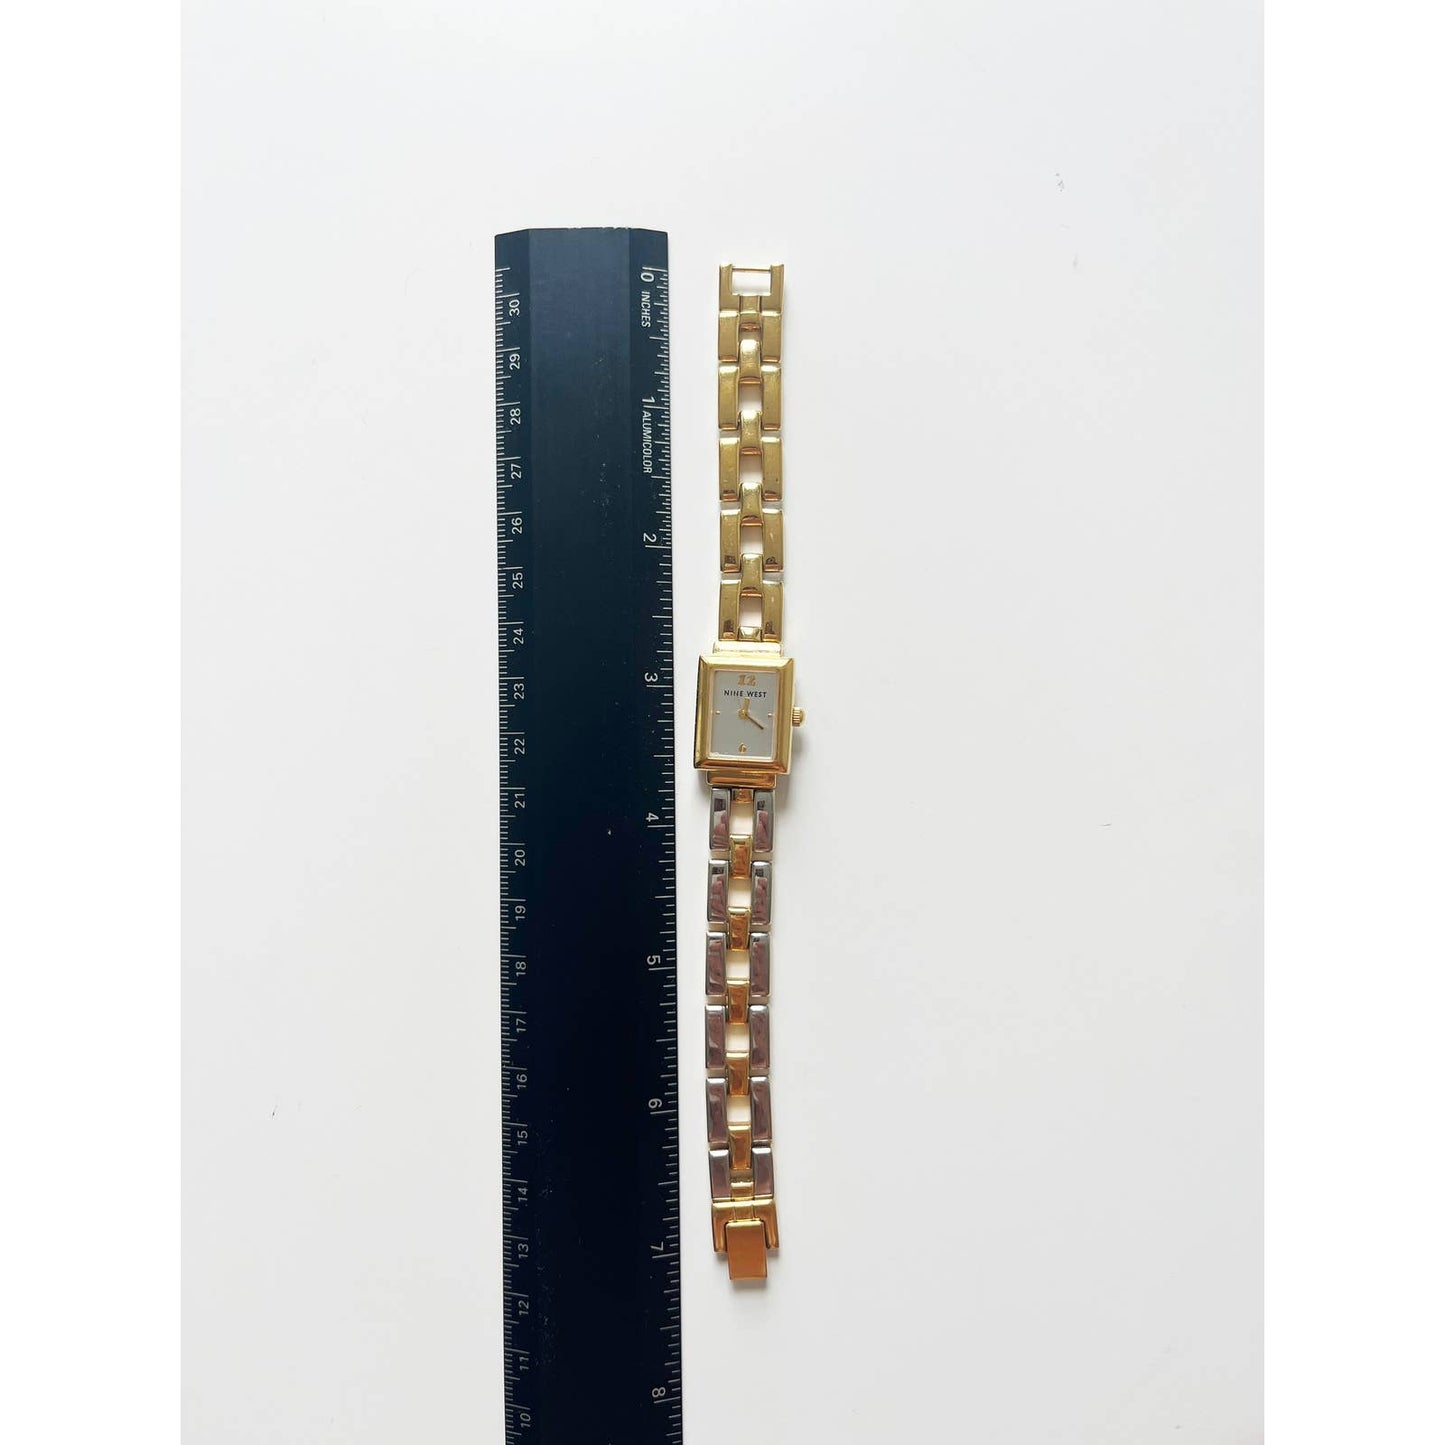 Vintage Gold Rectangular Bracelet Watch Two Tone Option